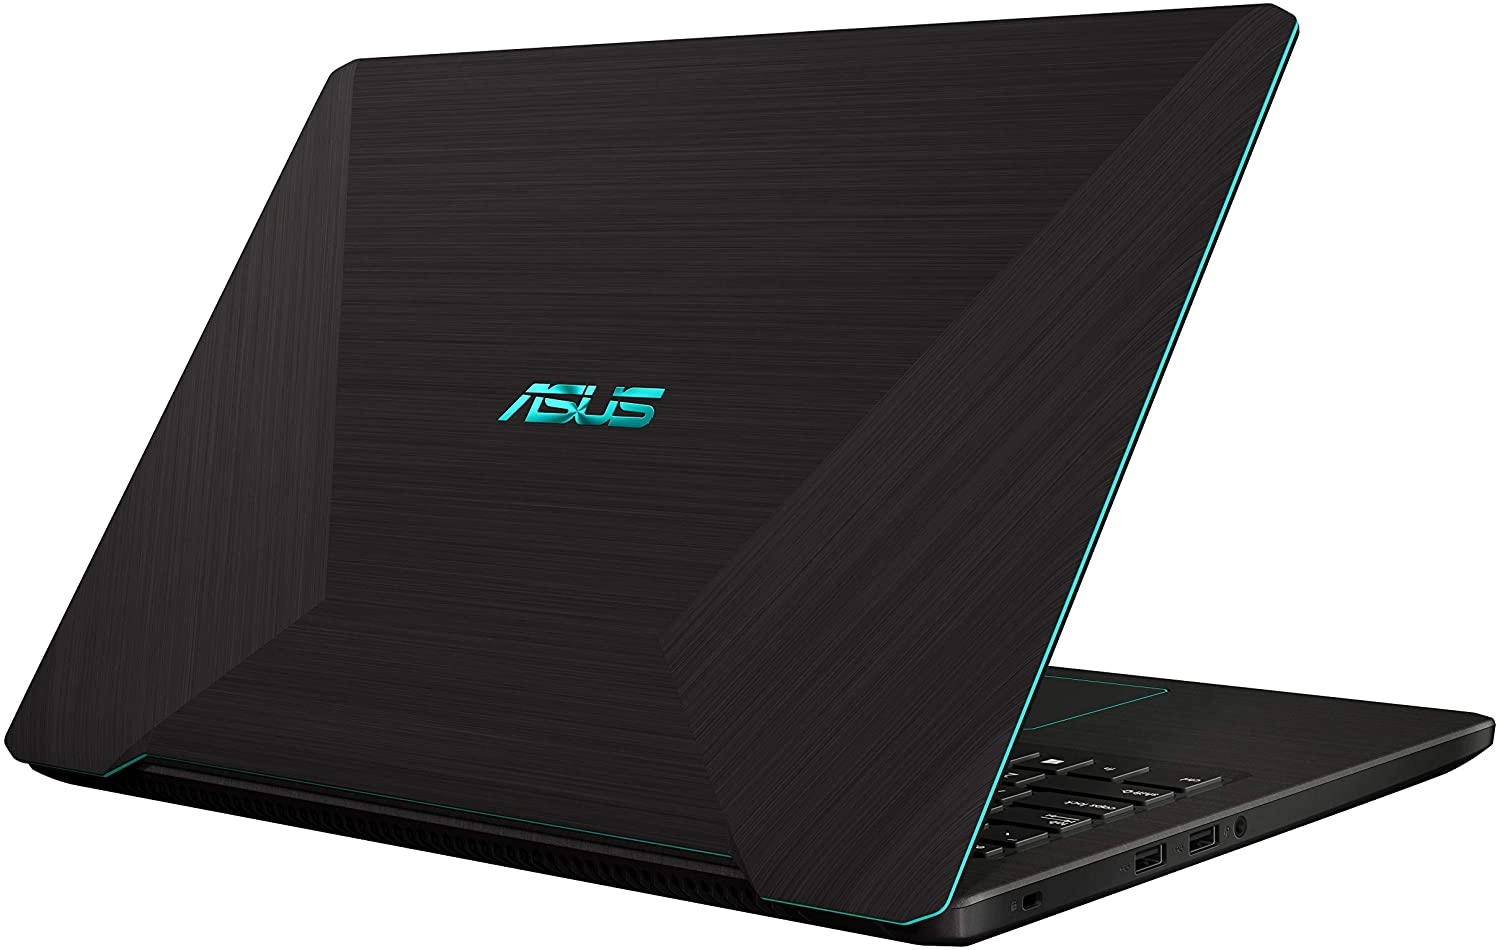 Asus VivoBook M15 laptop image